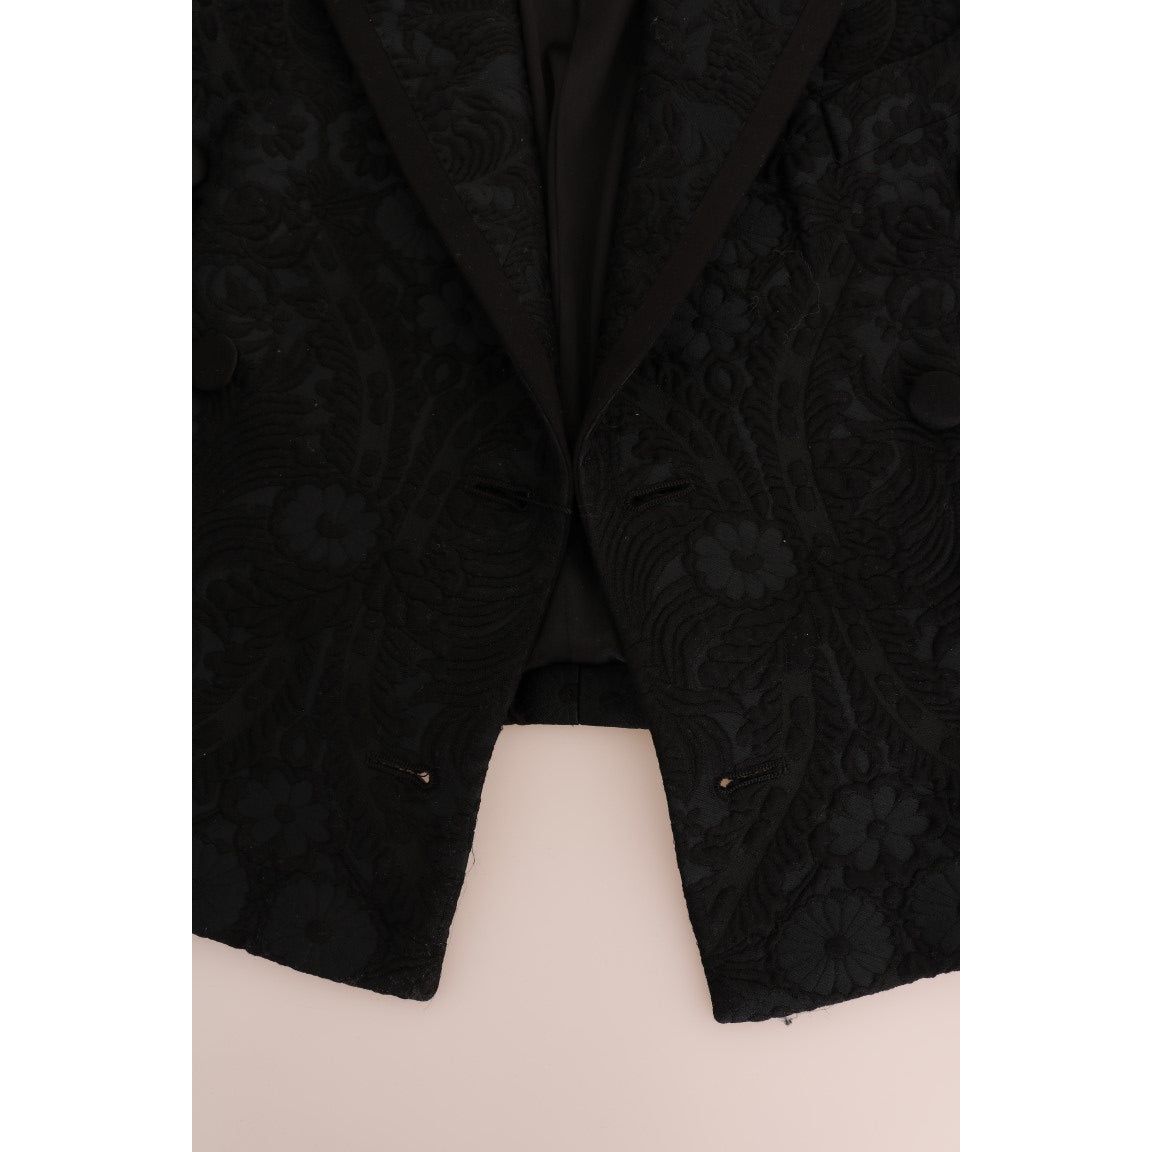 Dolce & Gabbana Enchanted Floral Crystal Blazer Jacket Blazer Jacket black-brocade-blazer-jacket